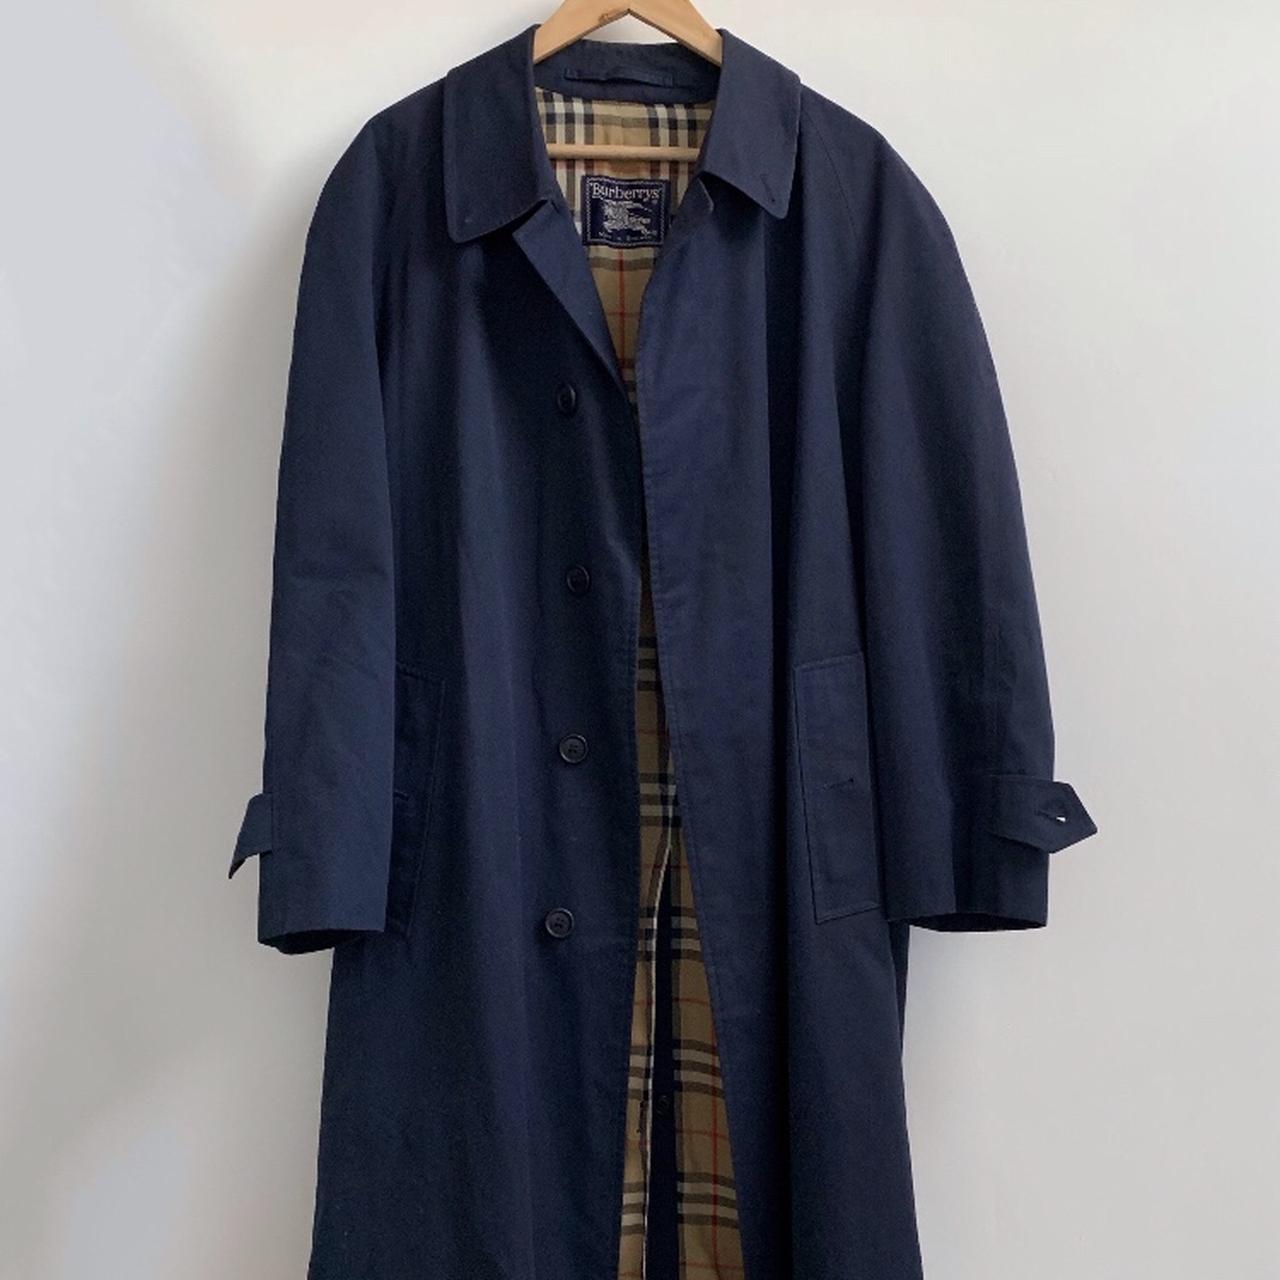 Original (rare) 1950’s Burberry trench coat in... - Depop